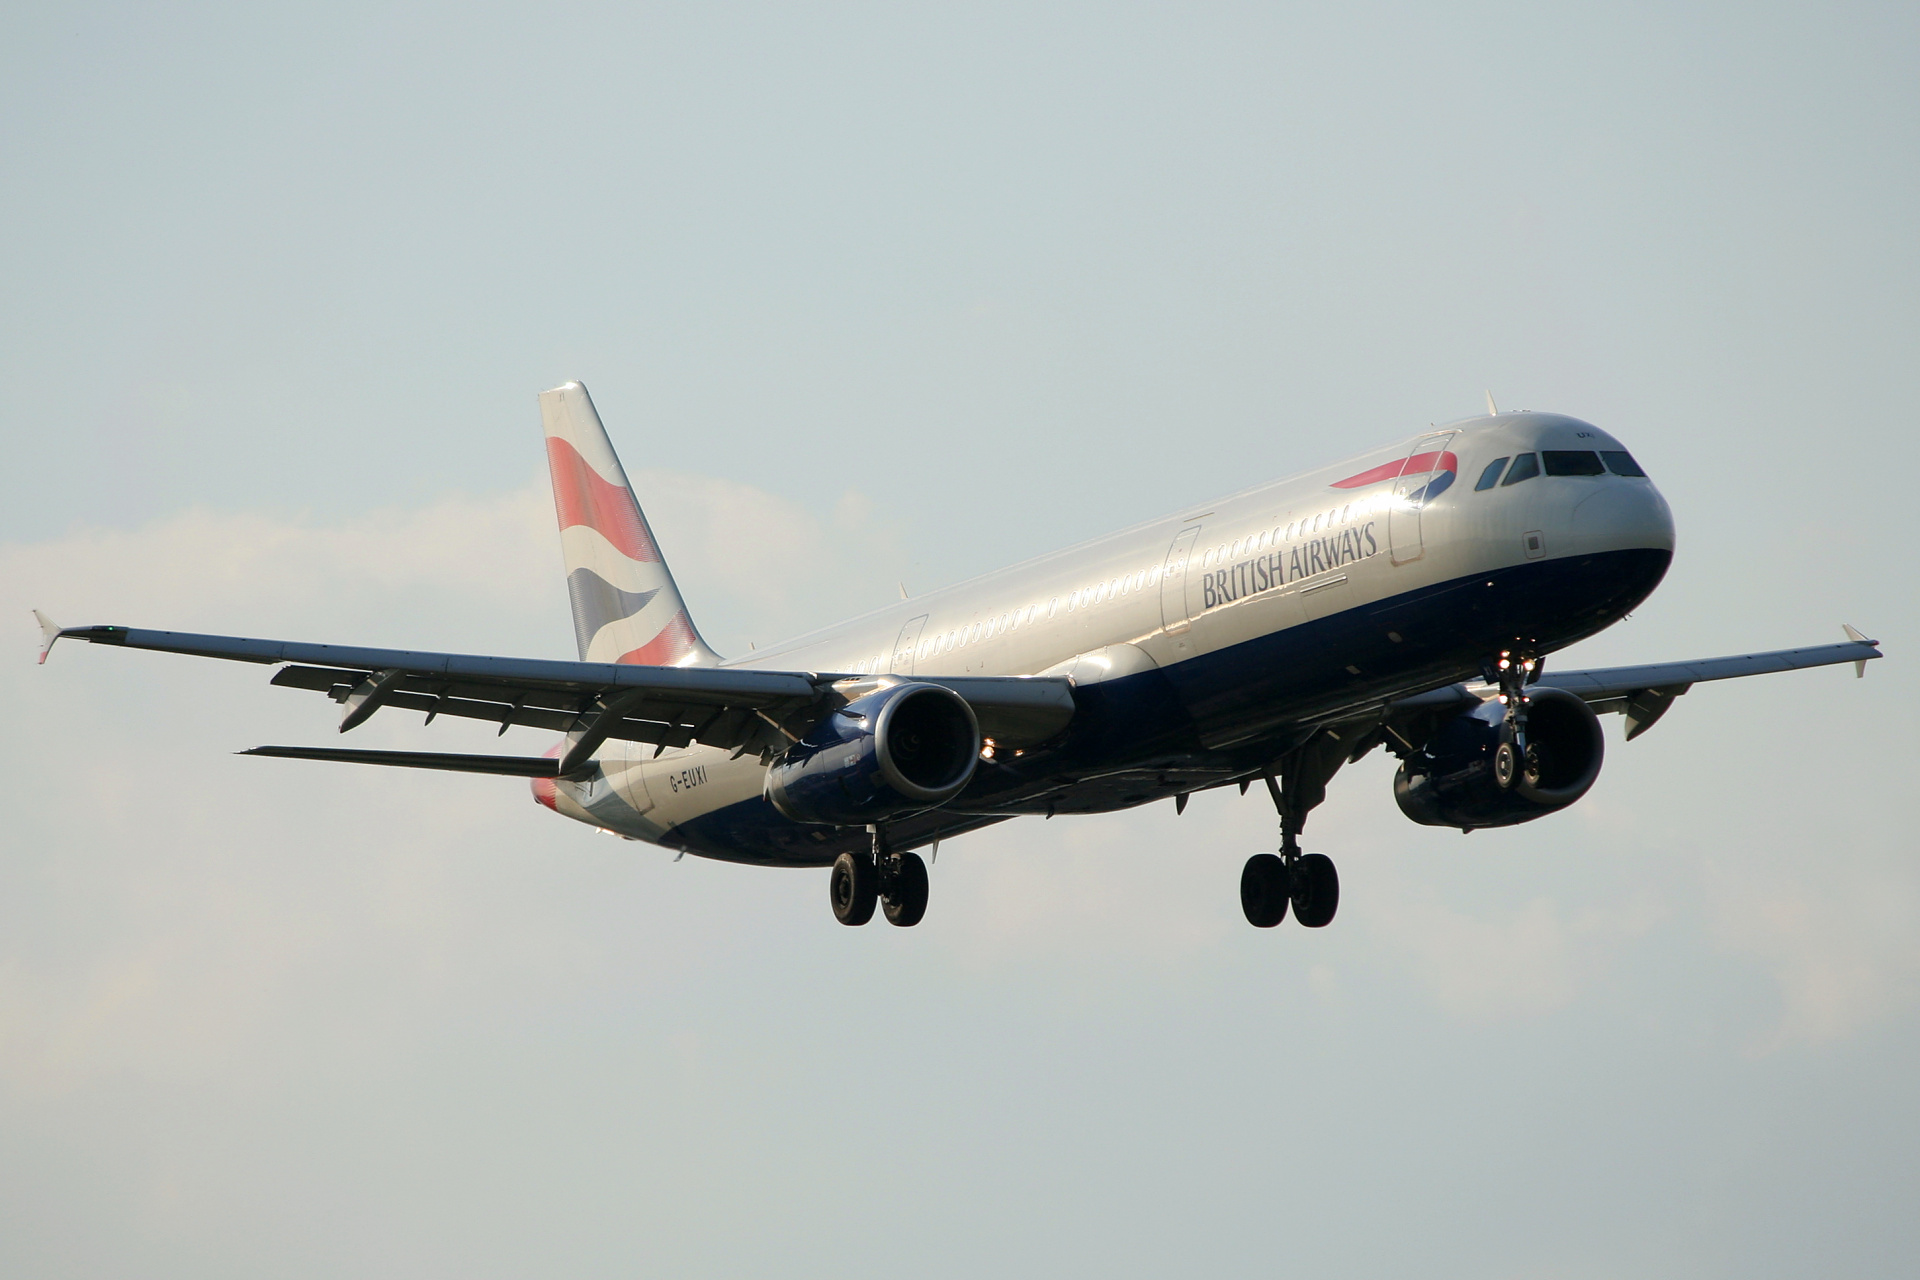 G-EUXI (Aircraft » EPWA Spotting » Airbus A321-200 » British Airways)